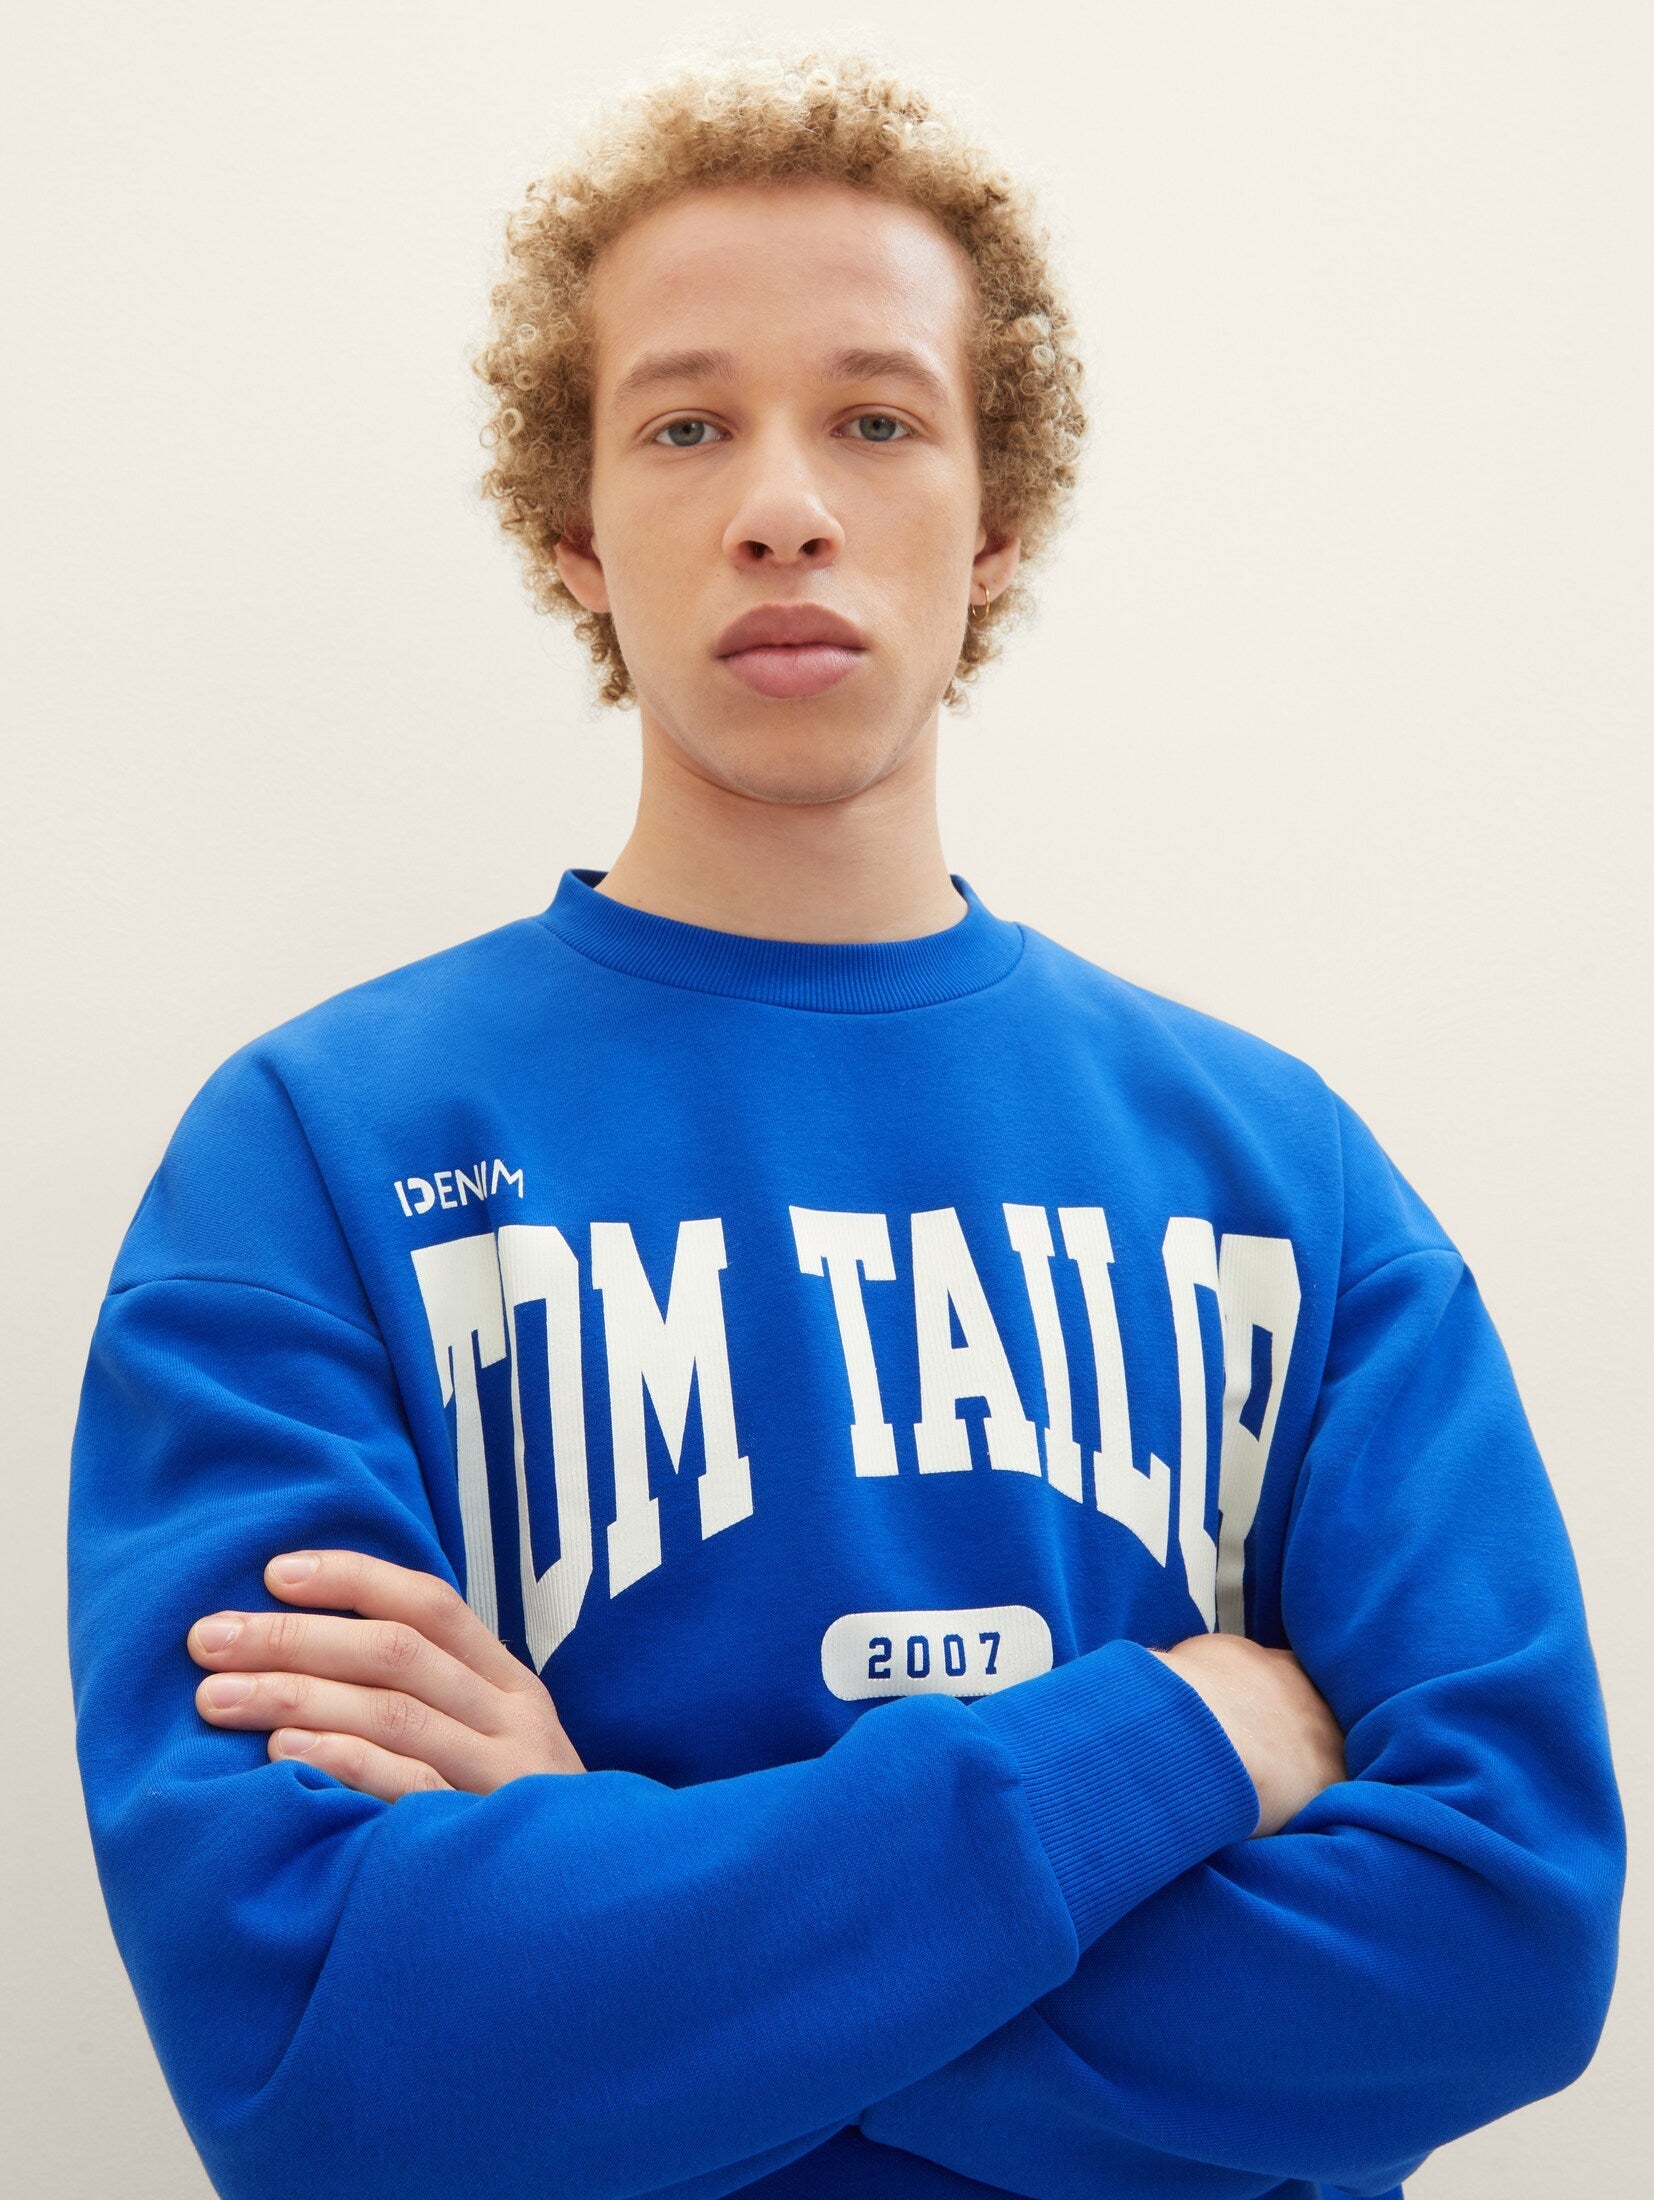 Tom Tailor Printed Design Blue Pullover